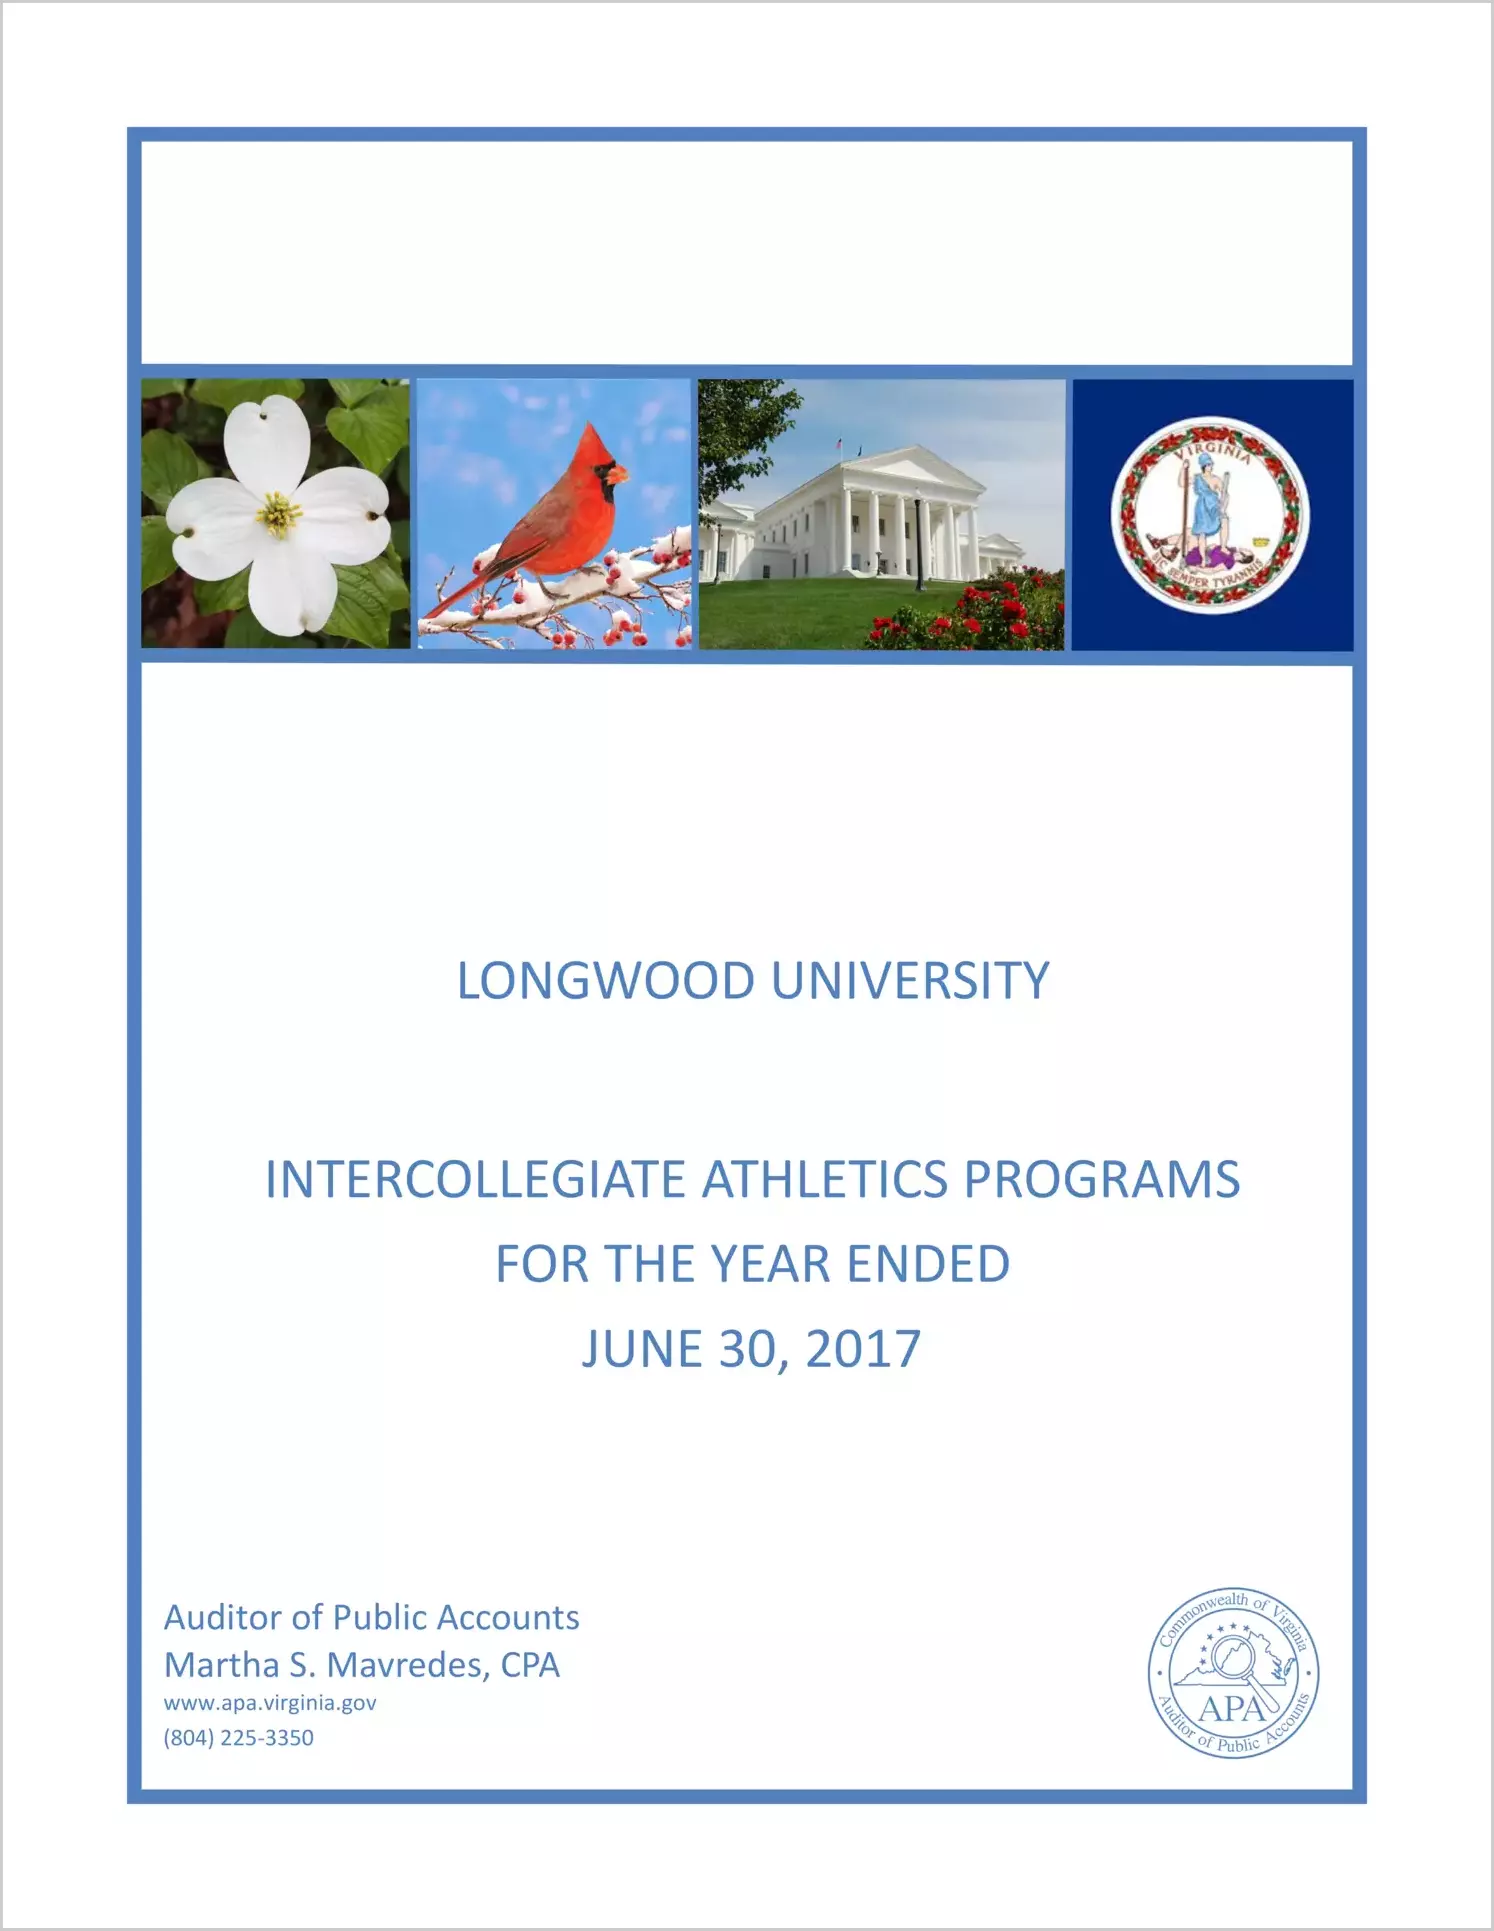 Longwood University Intercollegiate Athletics Programs for the year ended June 30, 2017